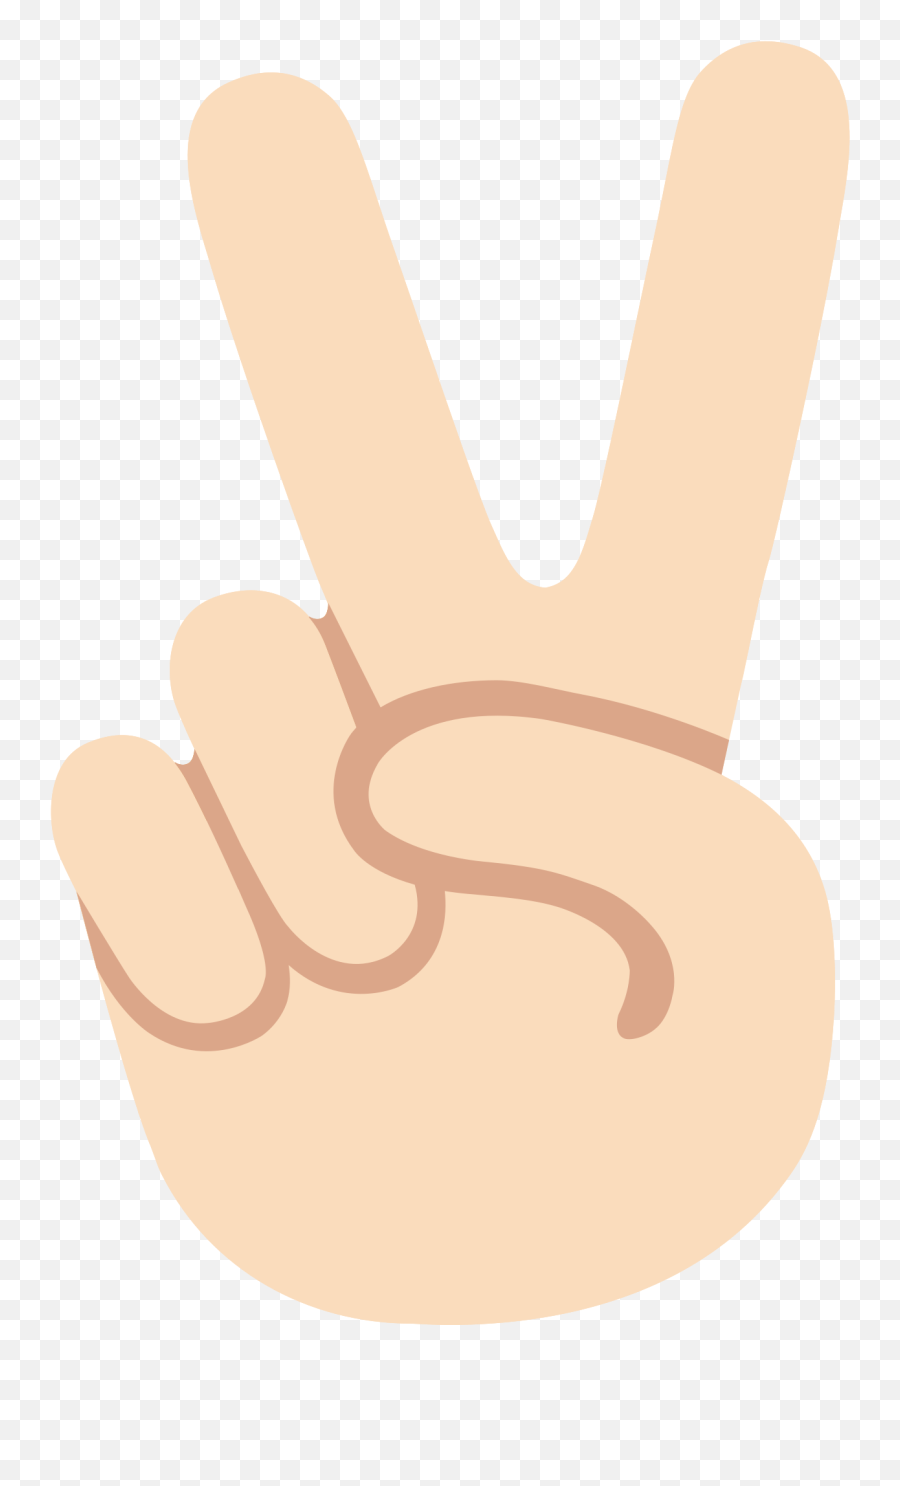 Emoji U270c 1f3fb - Sign Language,Peace Finger Emoji